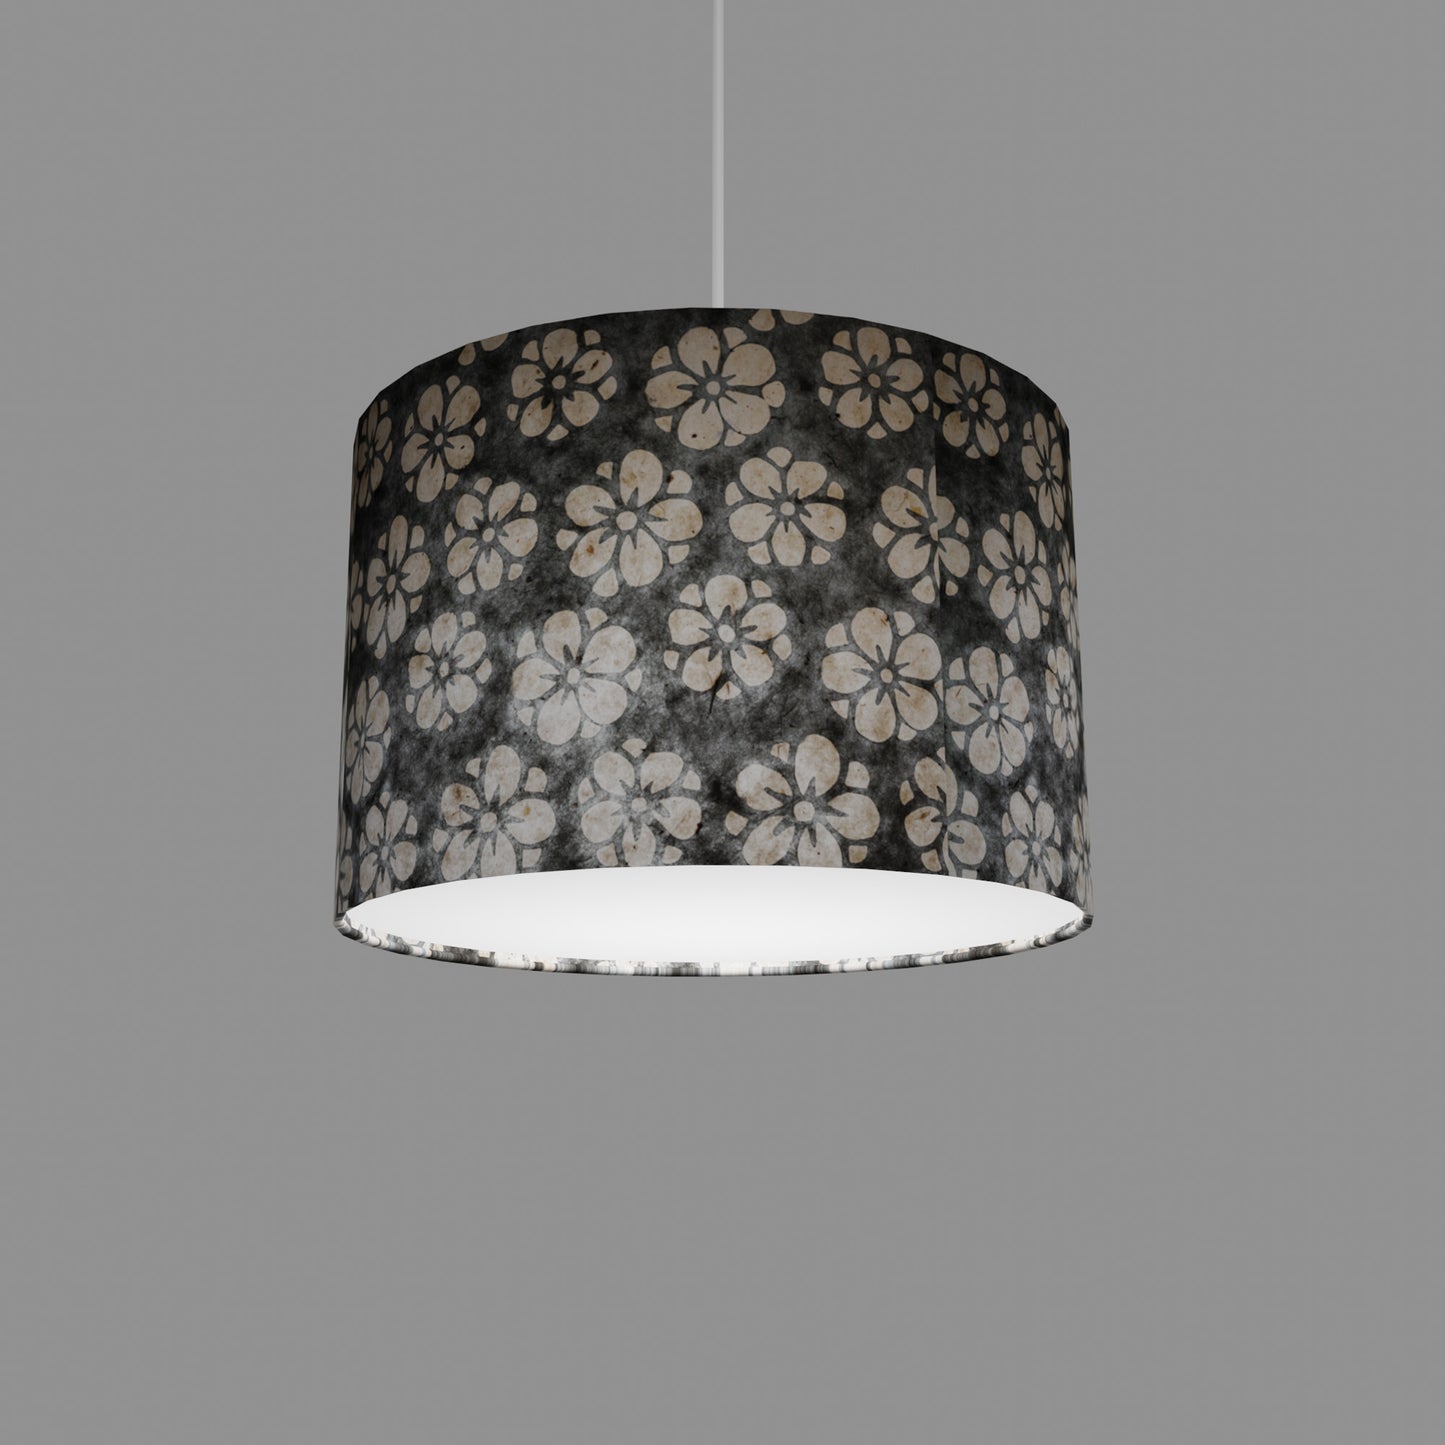 Drum Lamp Shade - P77 - Batik Star Flower Grey, 30cm(d) x 20cm(h)